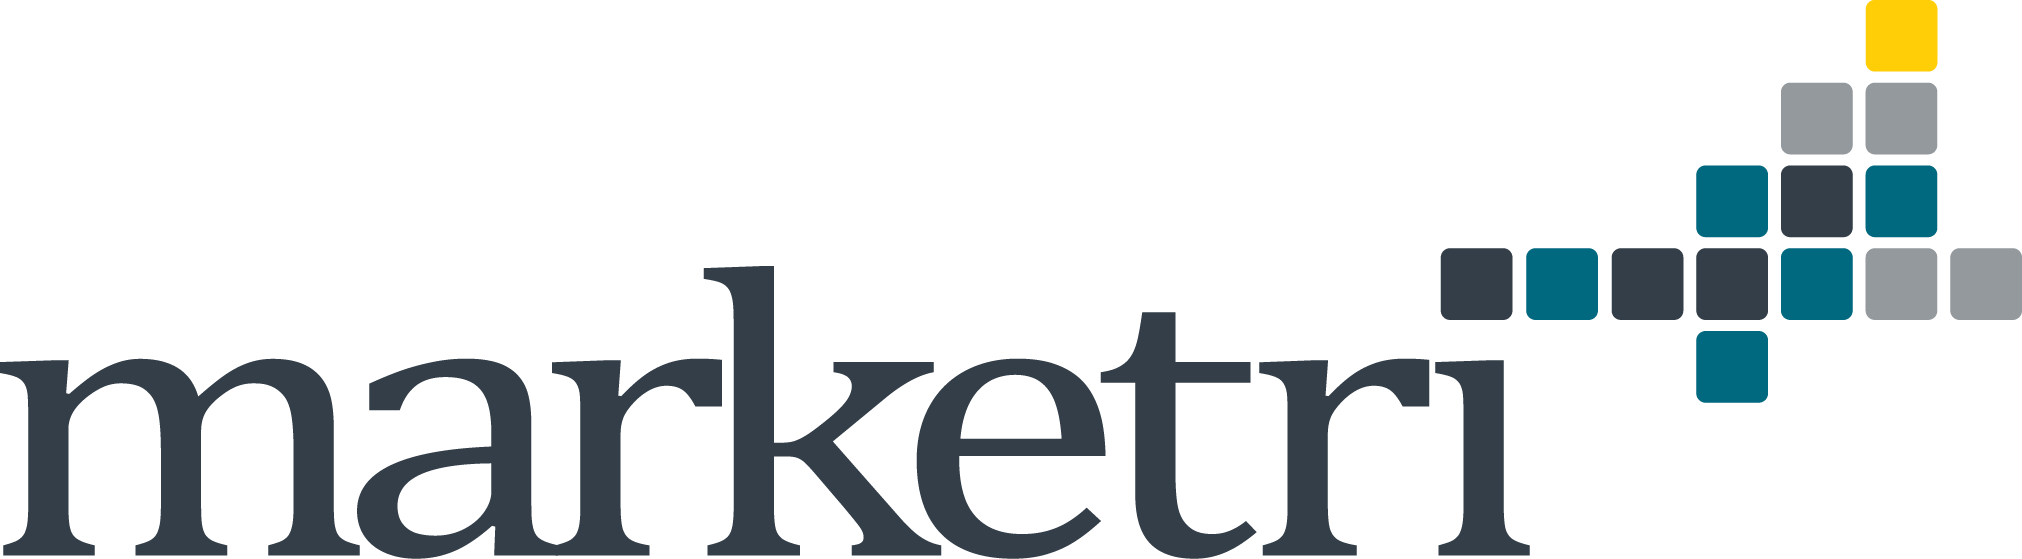 Marketri Logo_2017_FINAL